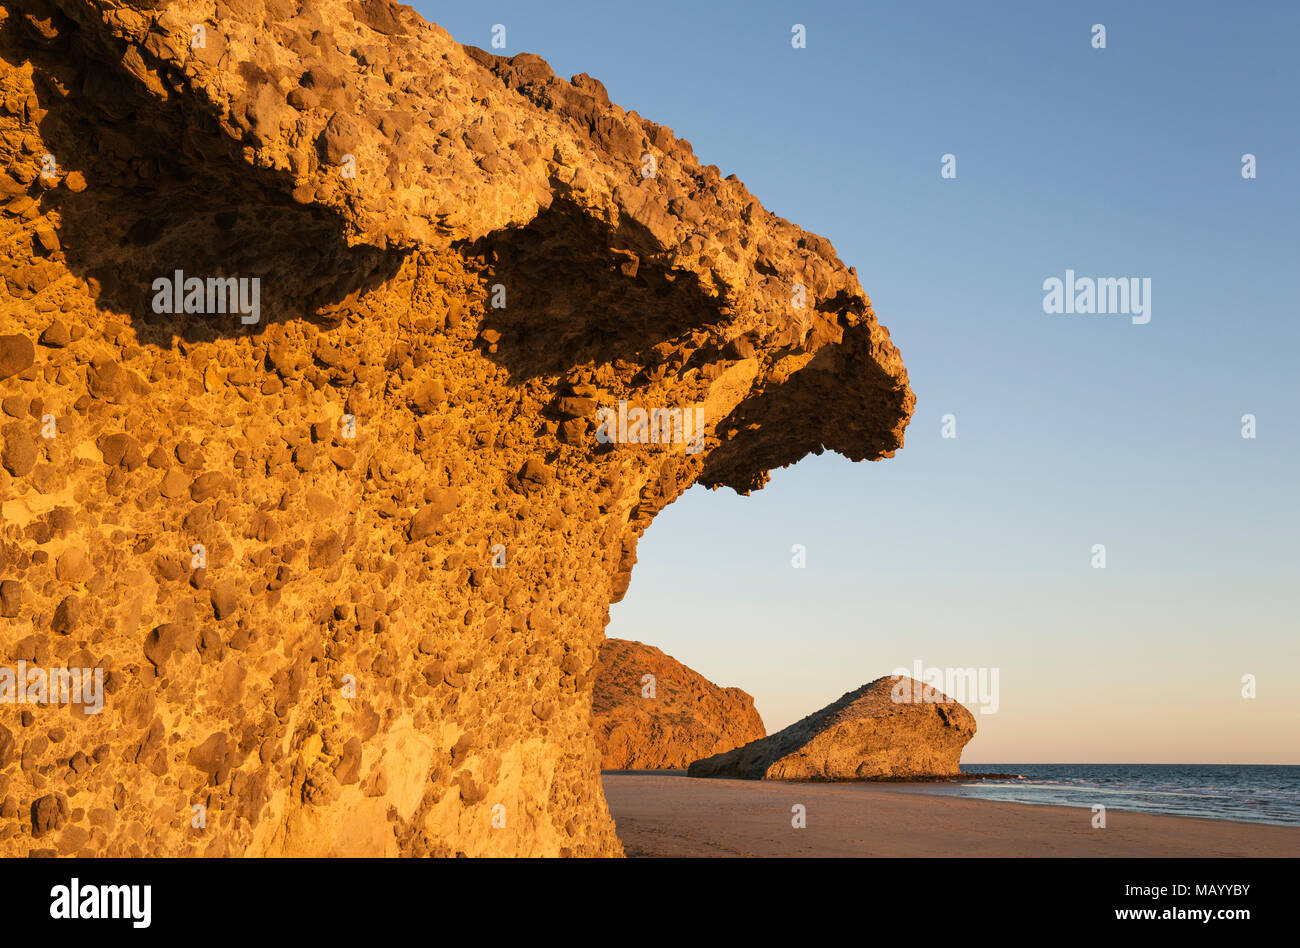 Fossilized lava tongues and walls at the beach Playa del Monsul, Nature Reserve Cabo de Gata-Nijar, Almeria province, Andalusia Stock Photo